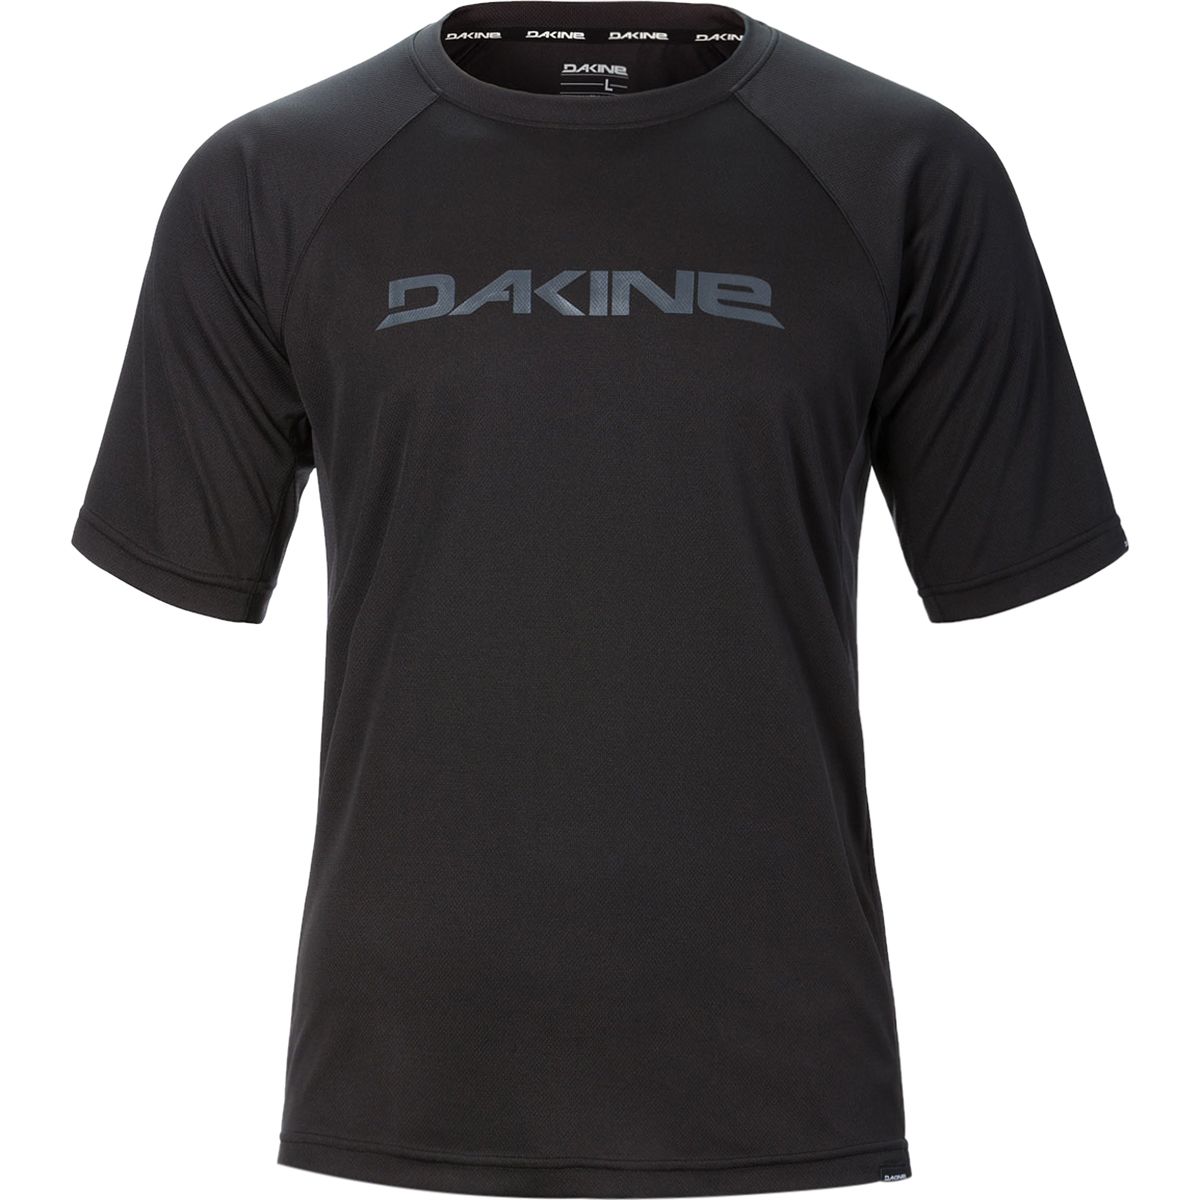 DAKINE Rail Jersey - Short-Sleeve - Men's